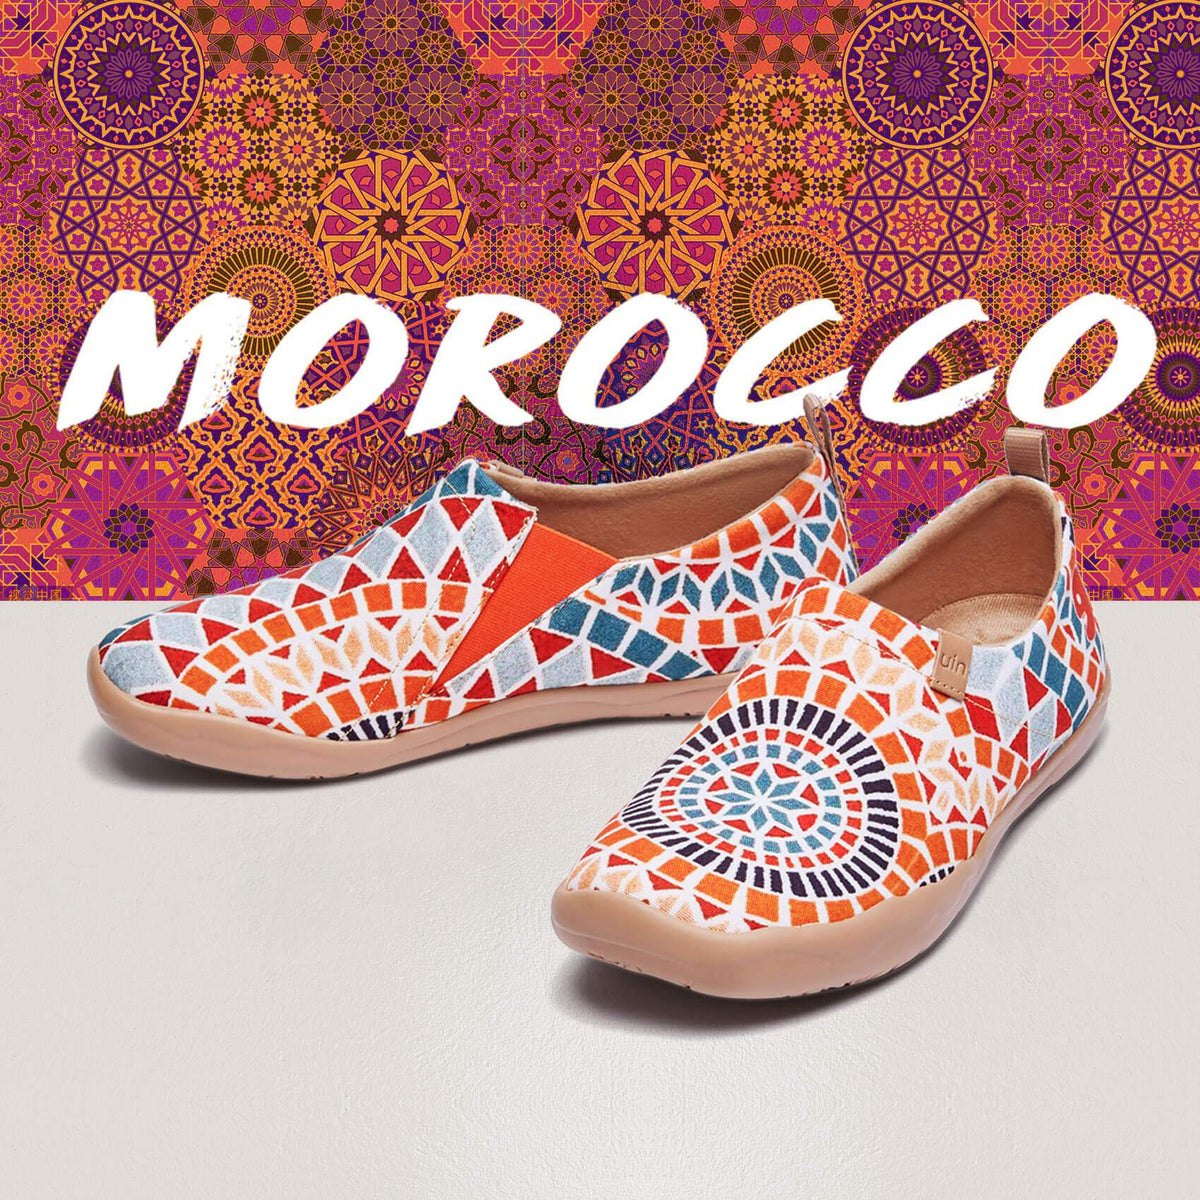 UIN Footwear Women Sunshine in Morocco Canvas loafers